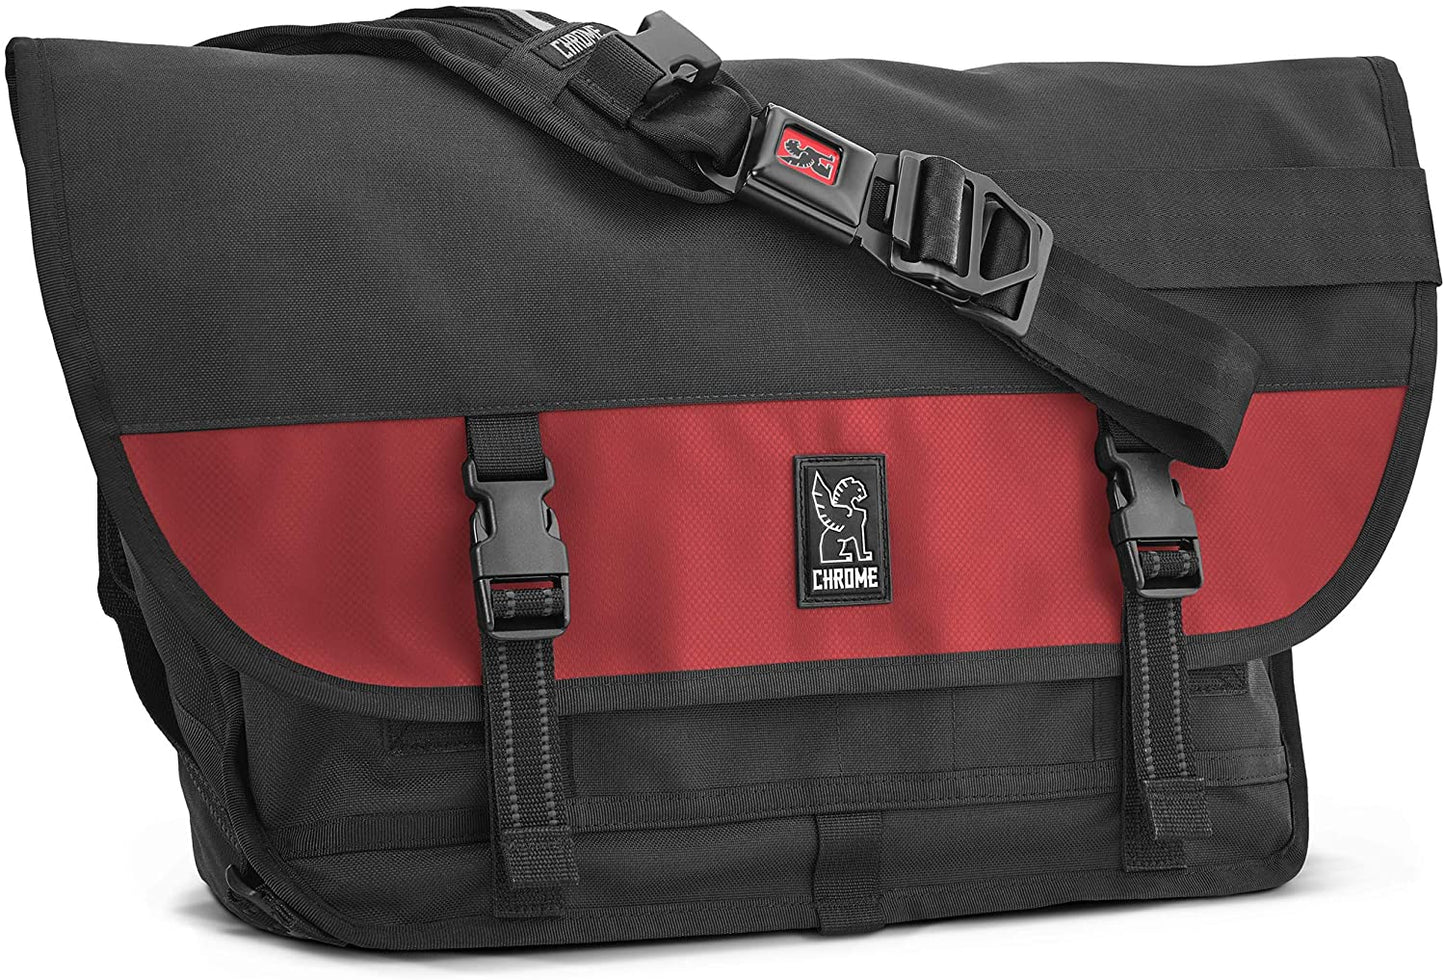 Chrome Industries Citizen Messenger Bag - 17 Inch Laptop Satchel with Signature Belt Buckle Closure, 24 Liter